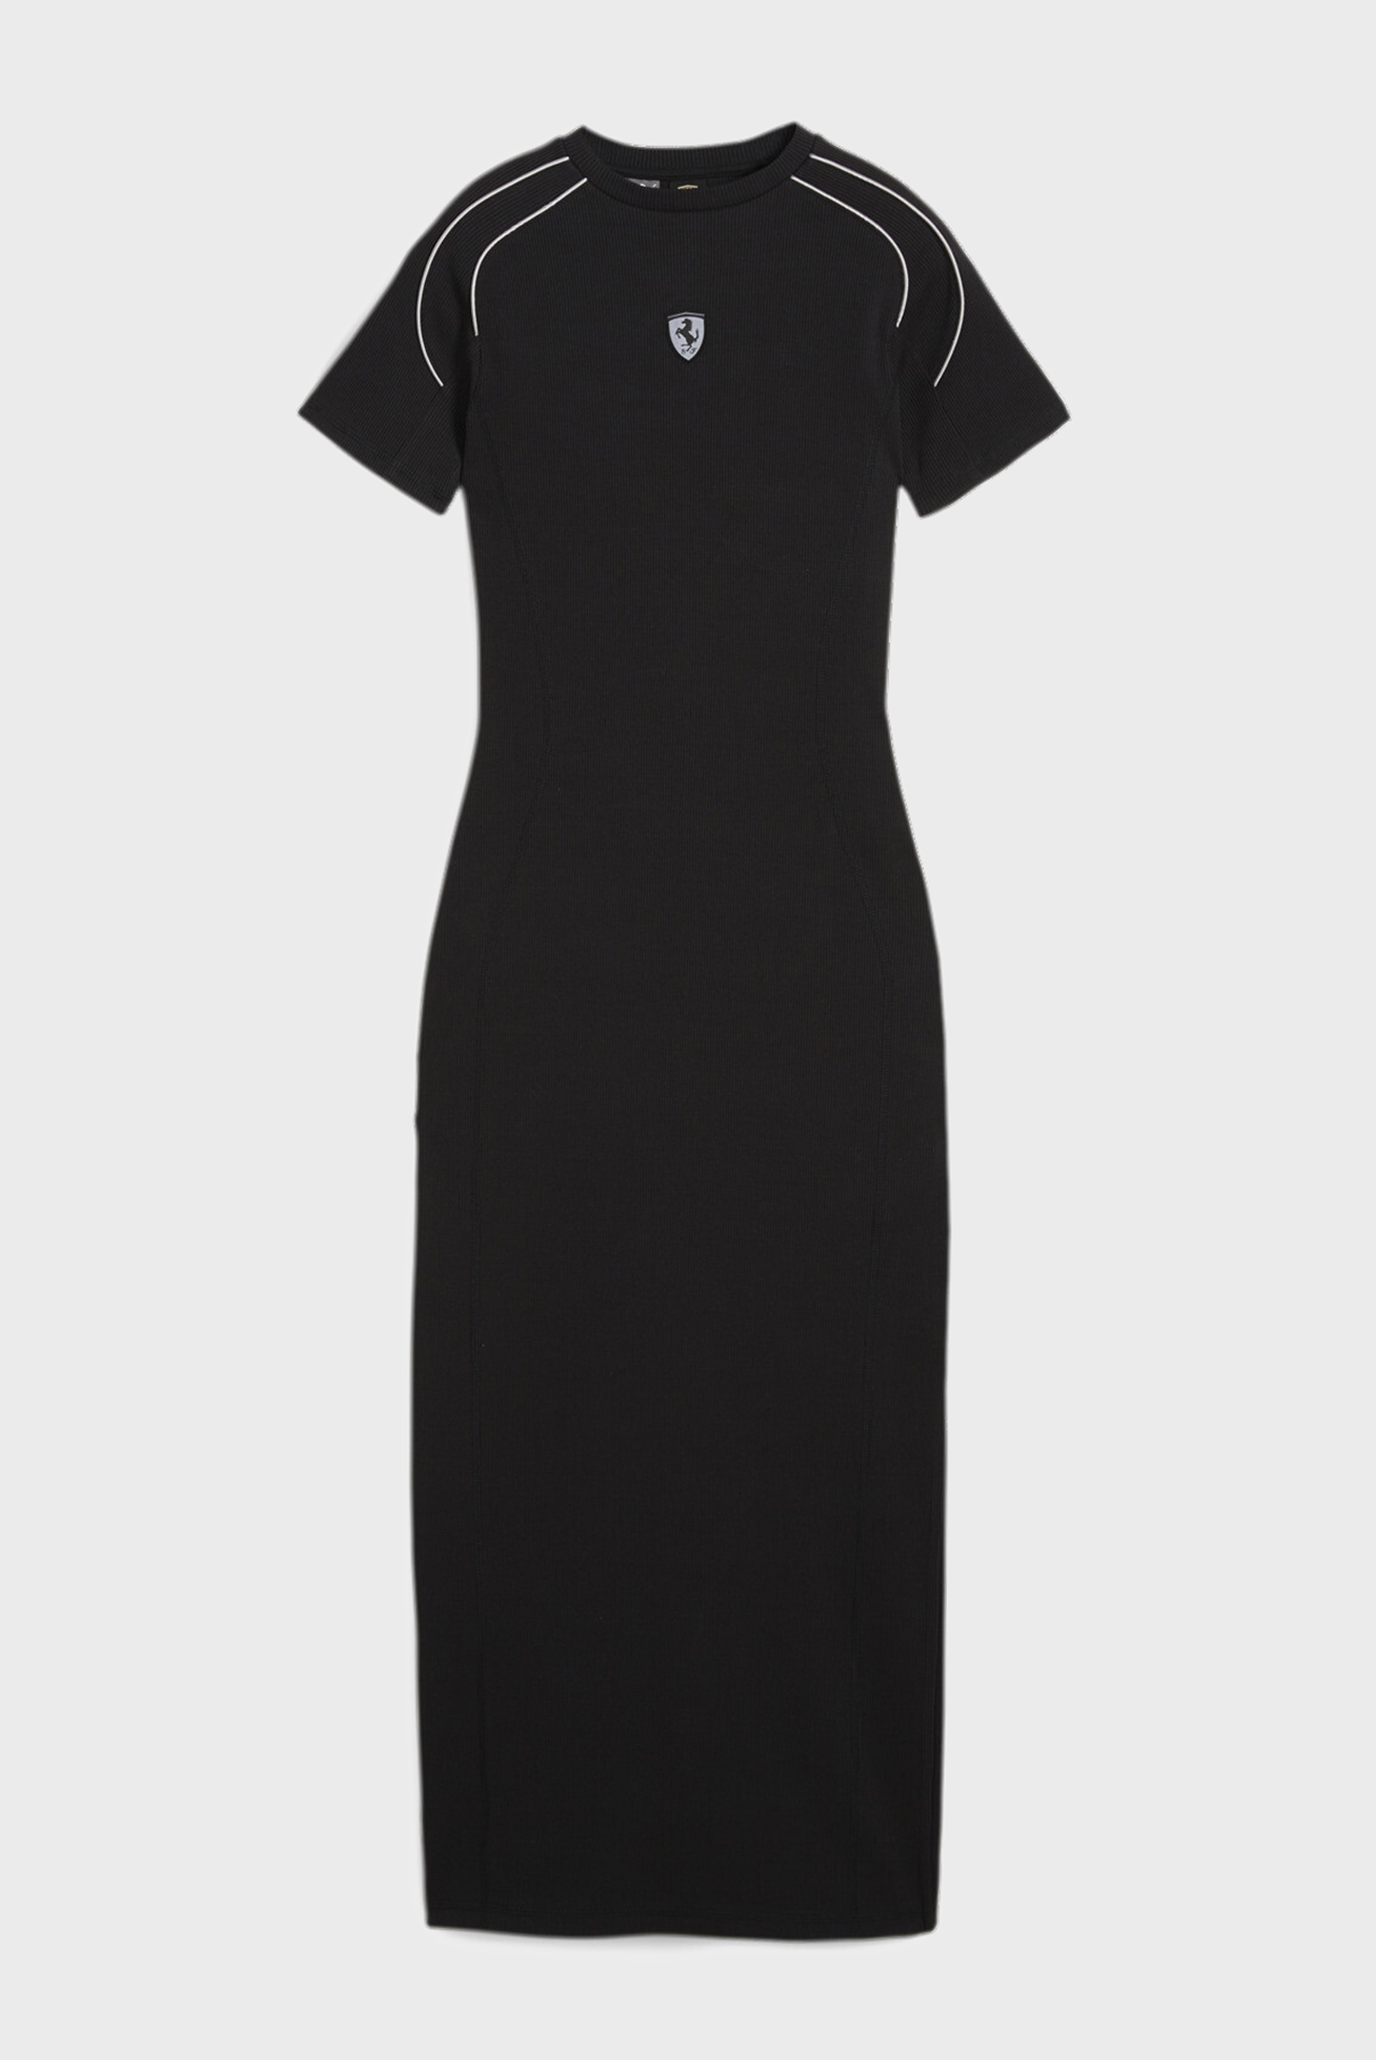 Жіноча чорна сукня Scuderia Ferrari Style Women's Dress 1